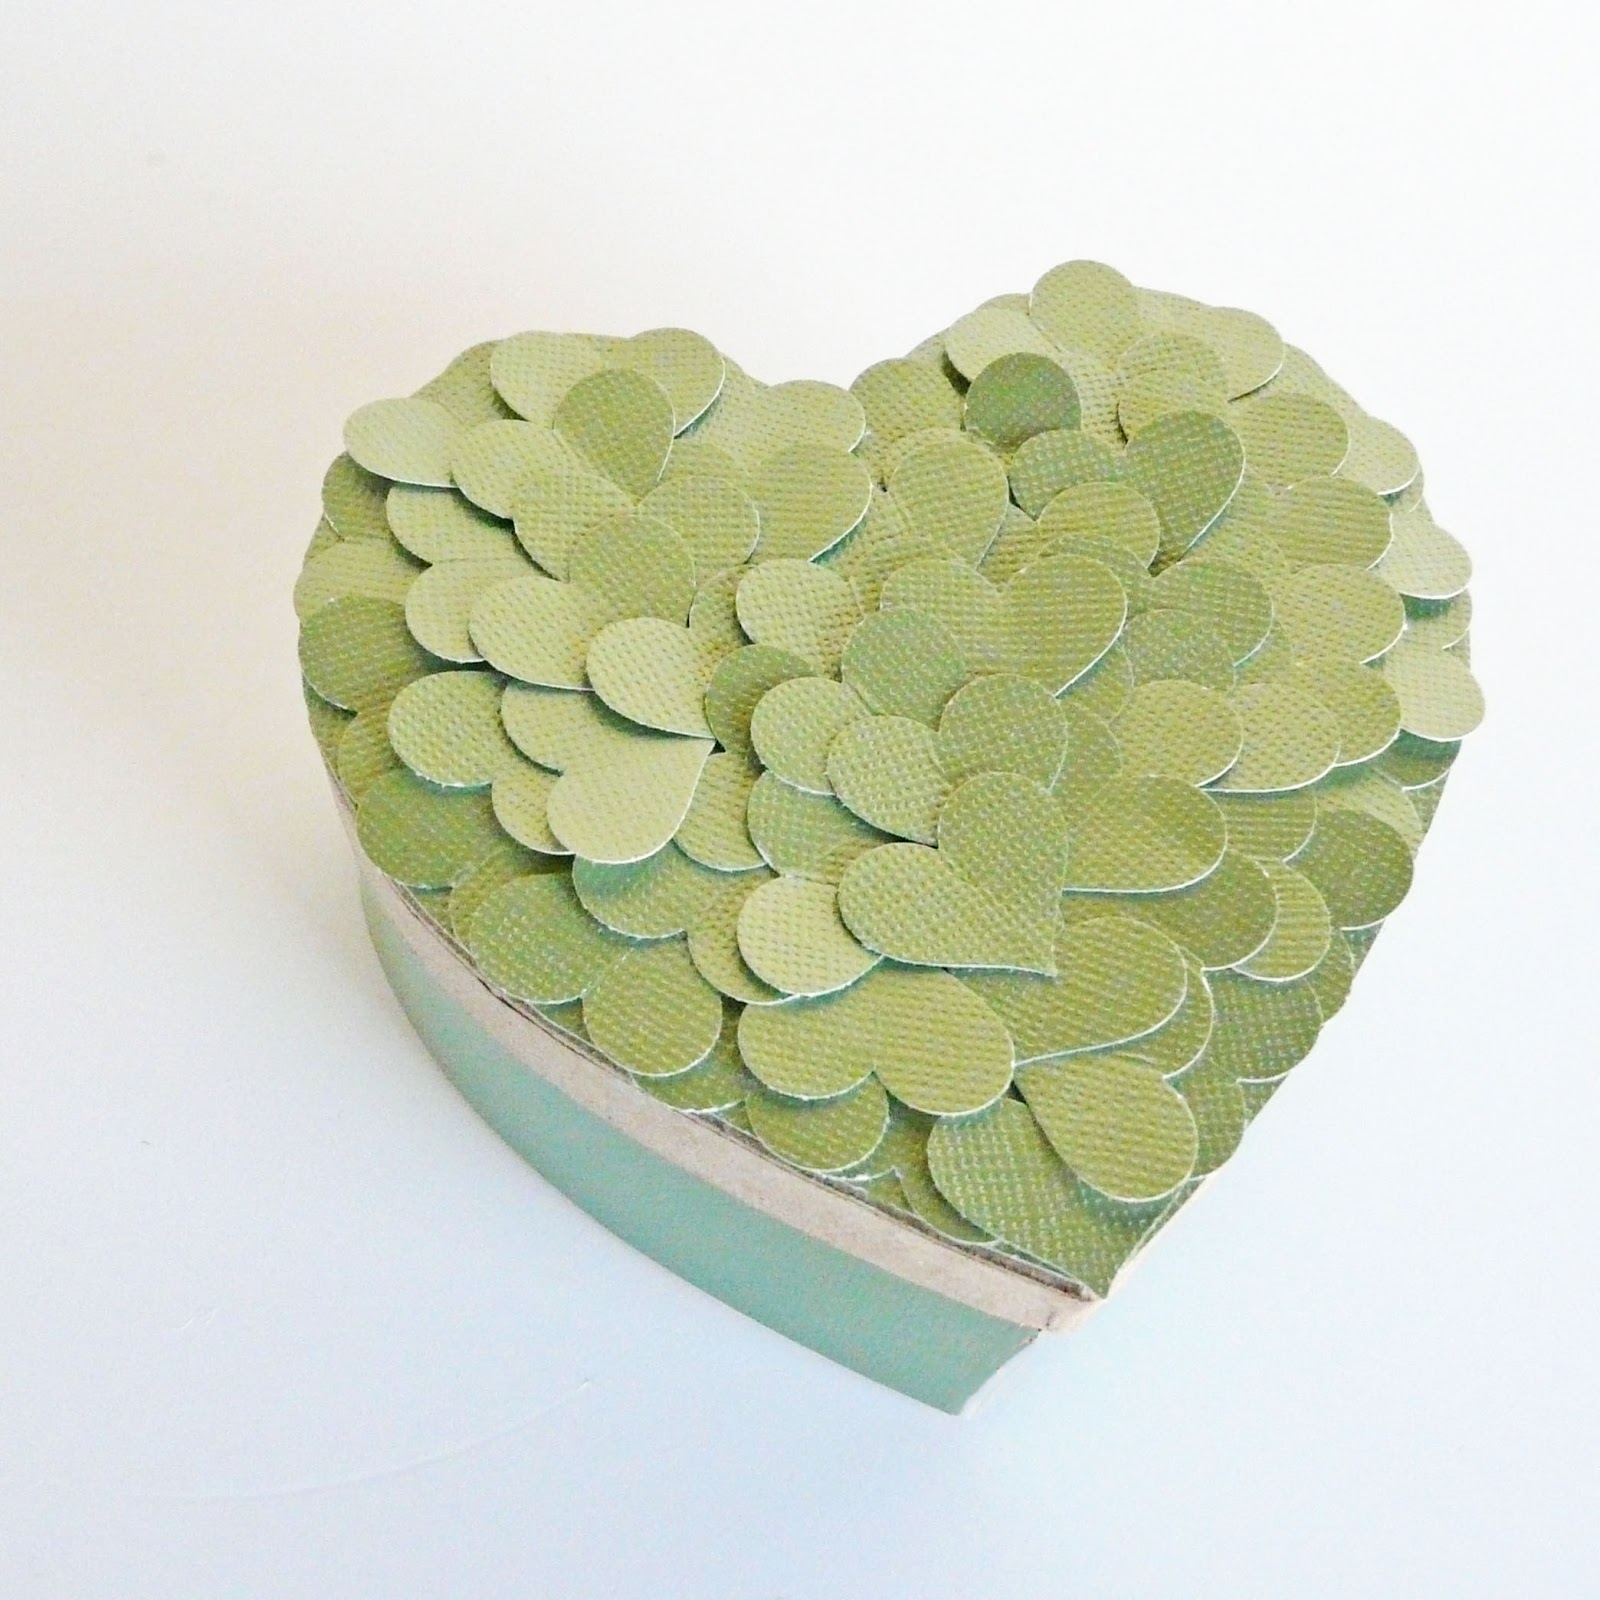 Paper Mache Heart Shaped Box 4.5 Inch x 4.5 Inch x 2 Inch